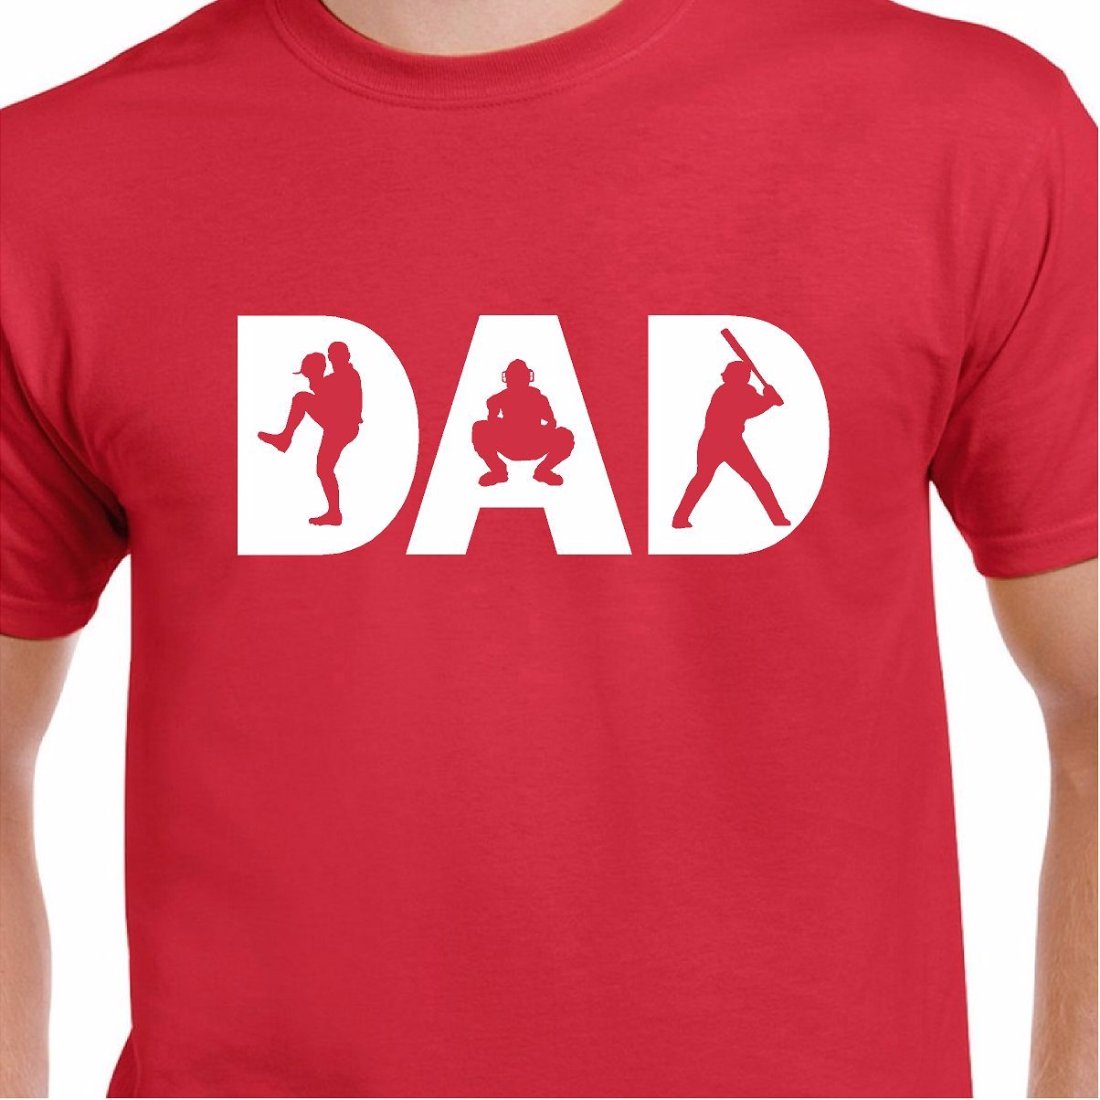 Baseball Shirt for Dad, Baseball Sports Shirts for Men XXL / Red